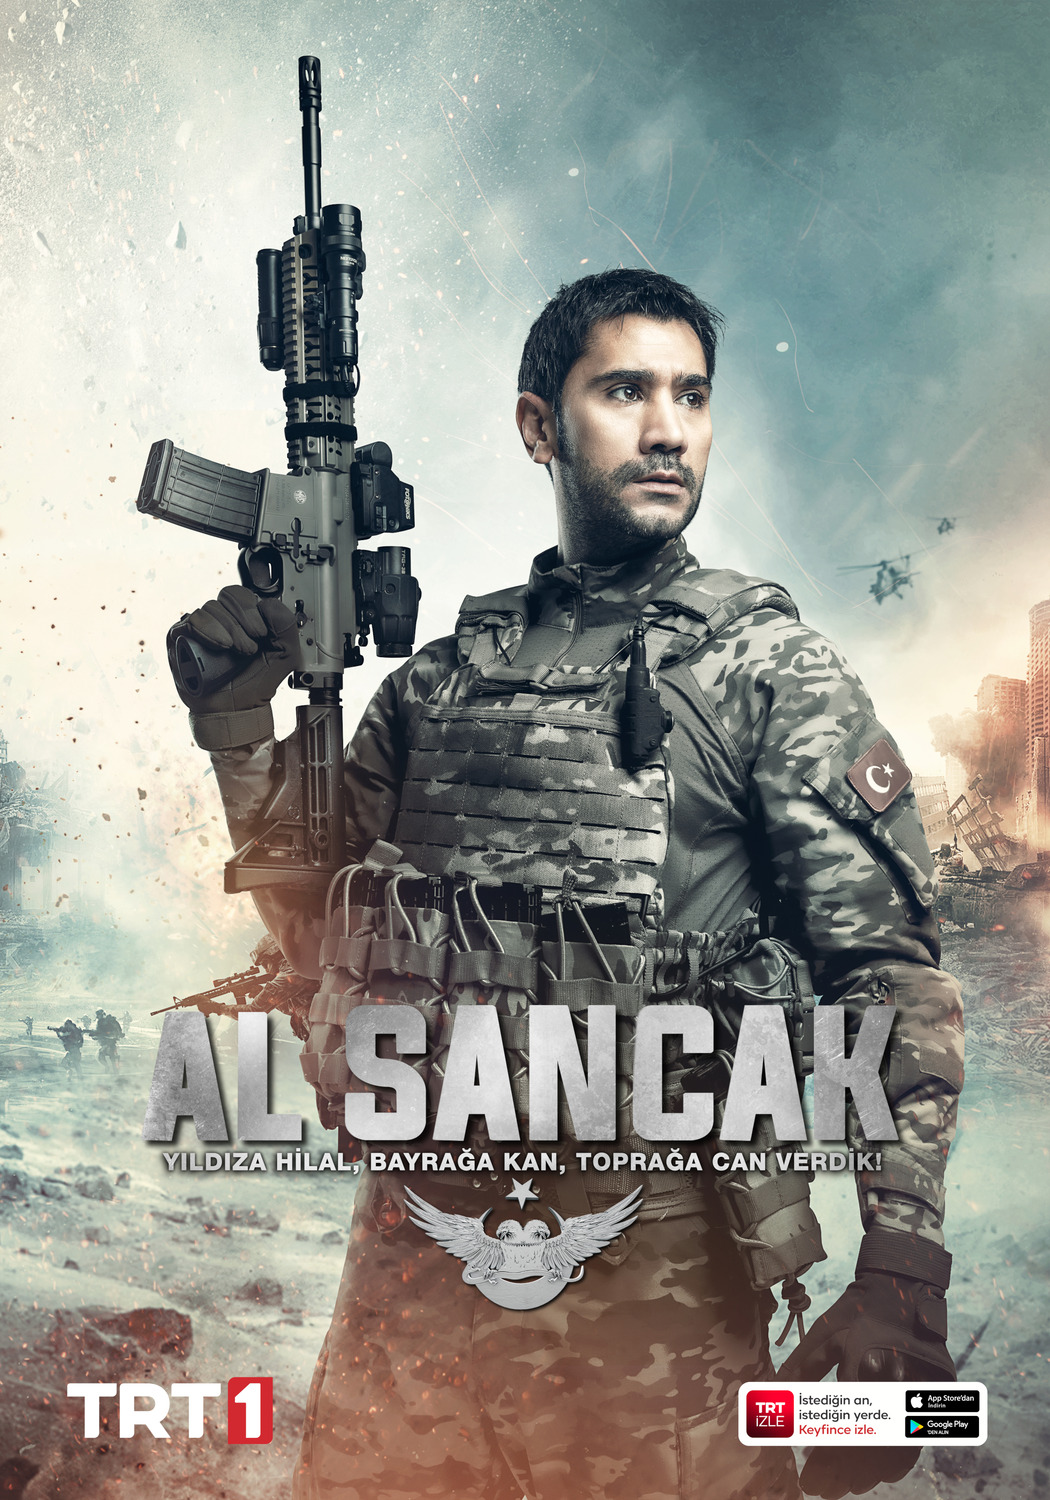 Extra Large TV Poster Image for Al Sancak (#9 of 20)